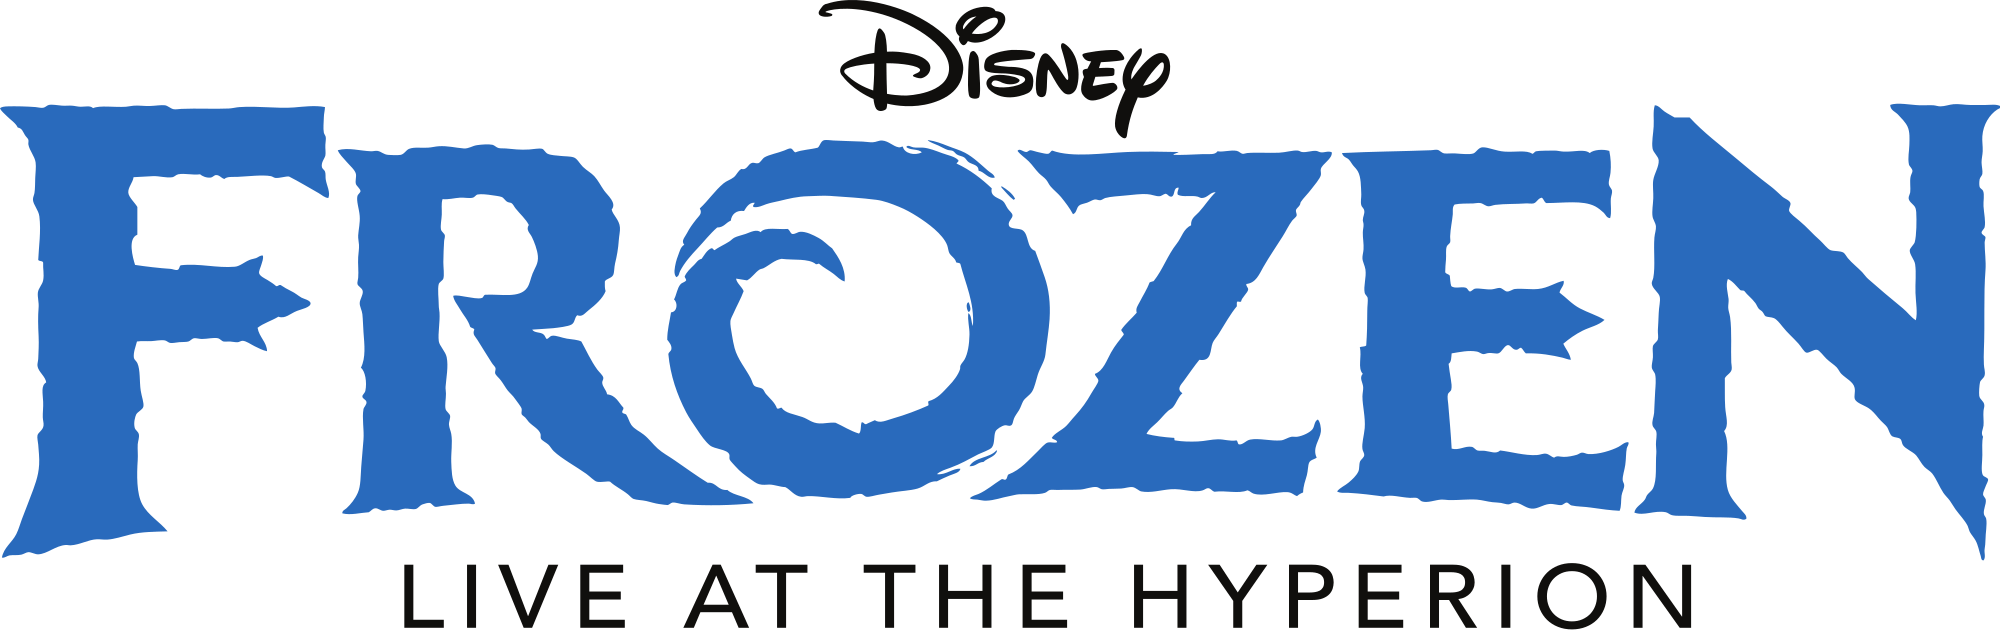 Blue Frozen Logo - Disney's Frozen at the Hyperion (blue).svg